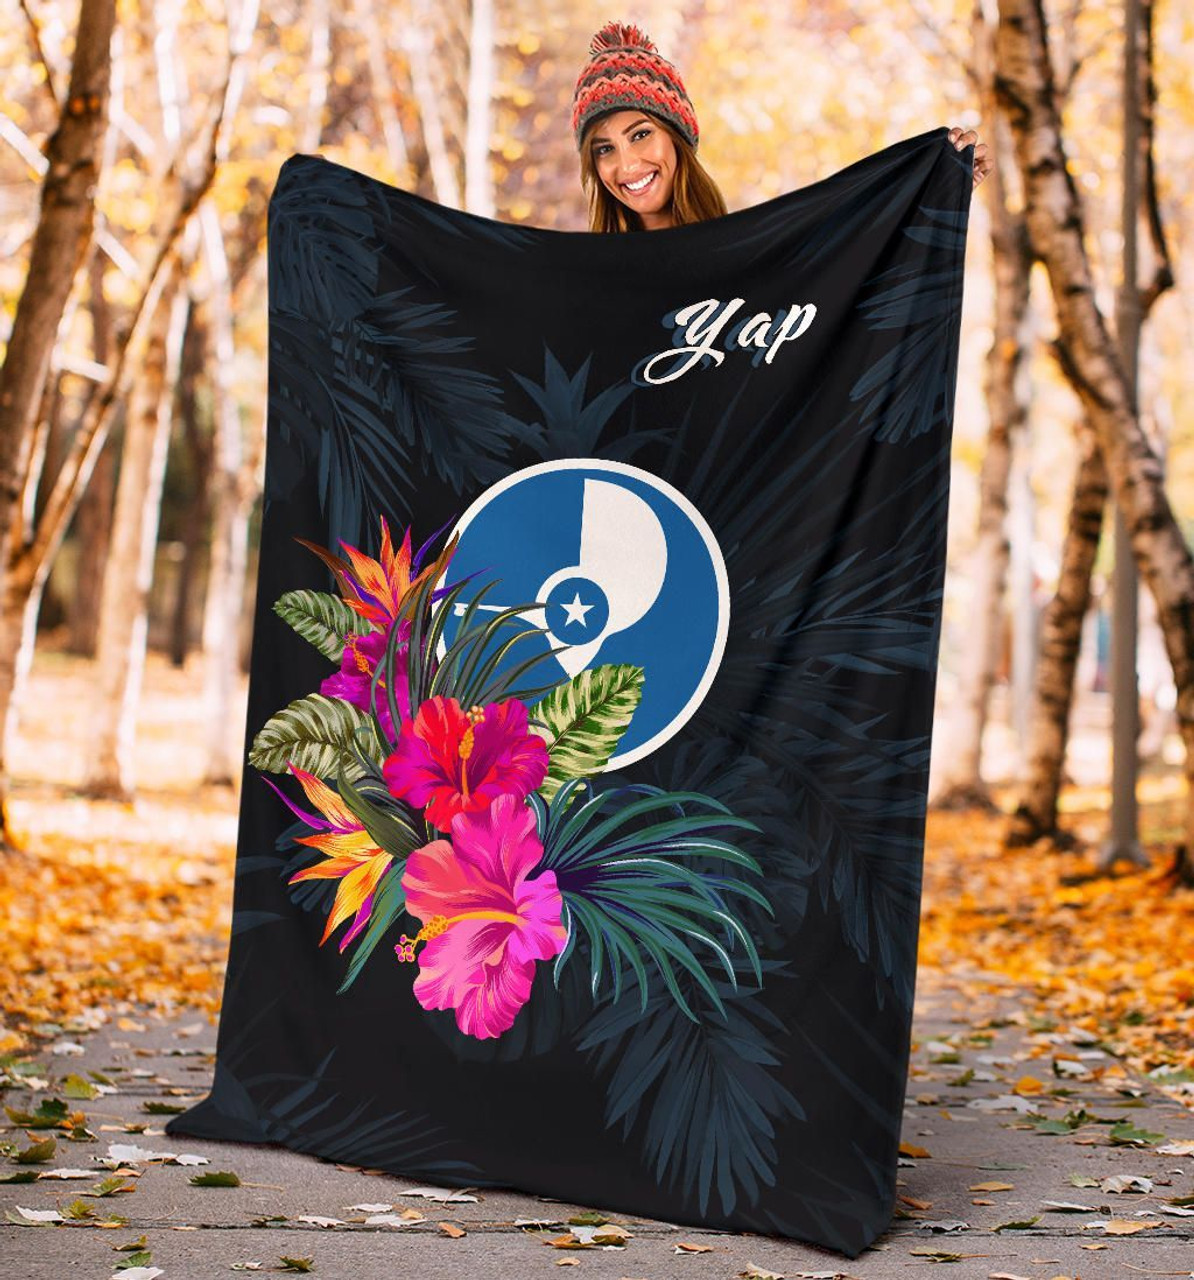 Yap Polynesian Premium Blanket - Tropical Flower 4